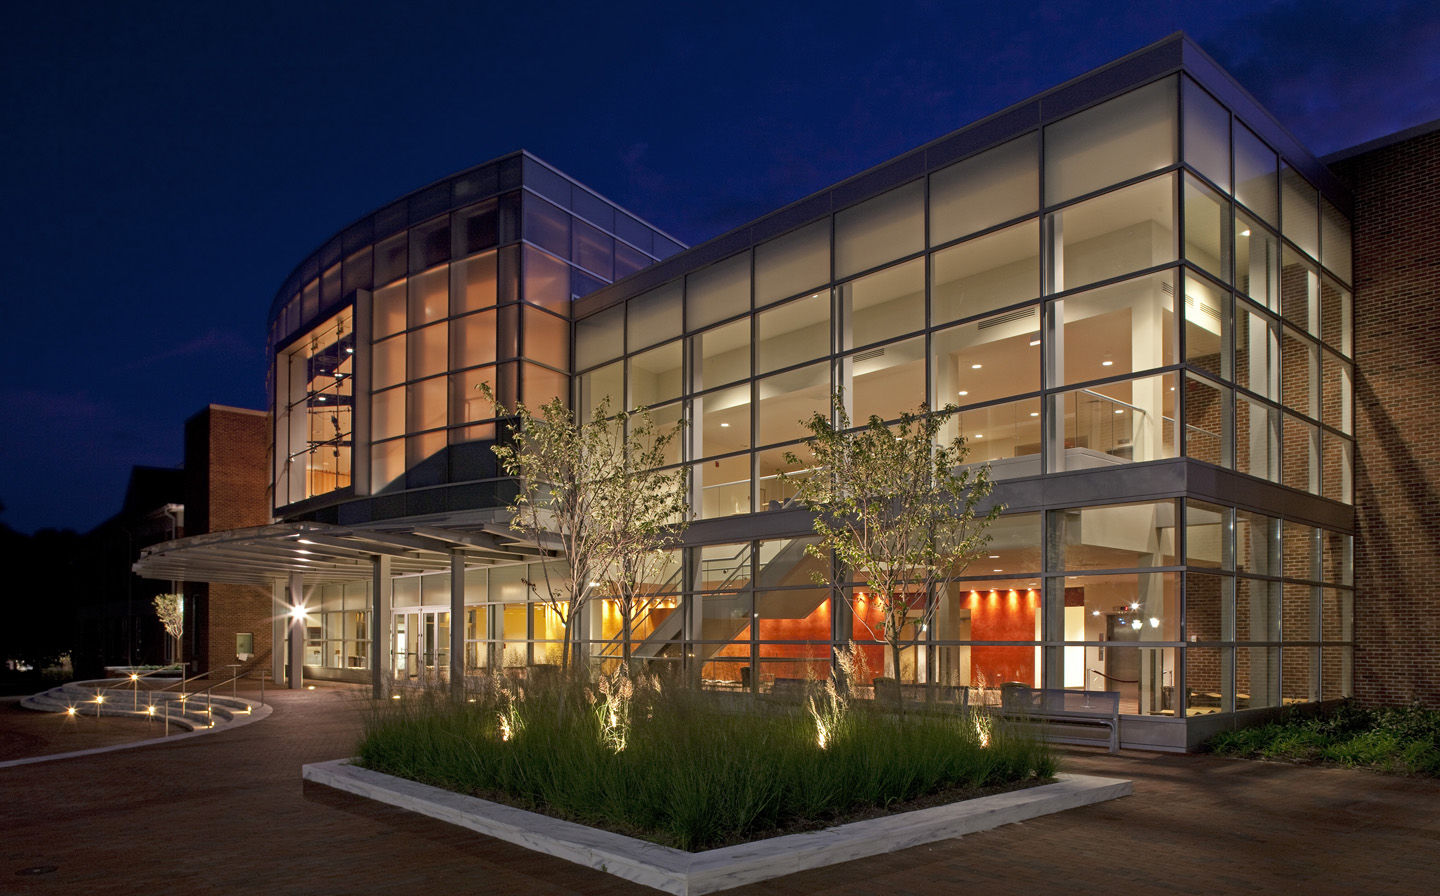 Washington College Gibson Center at night